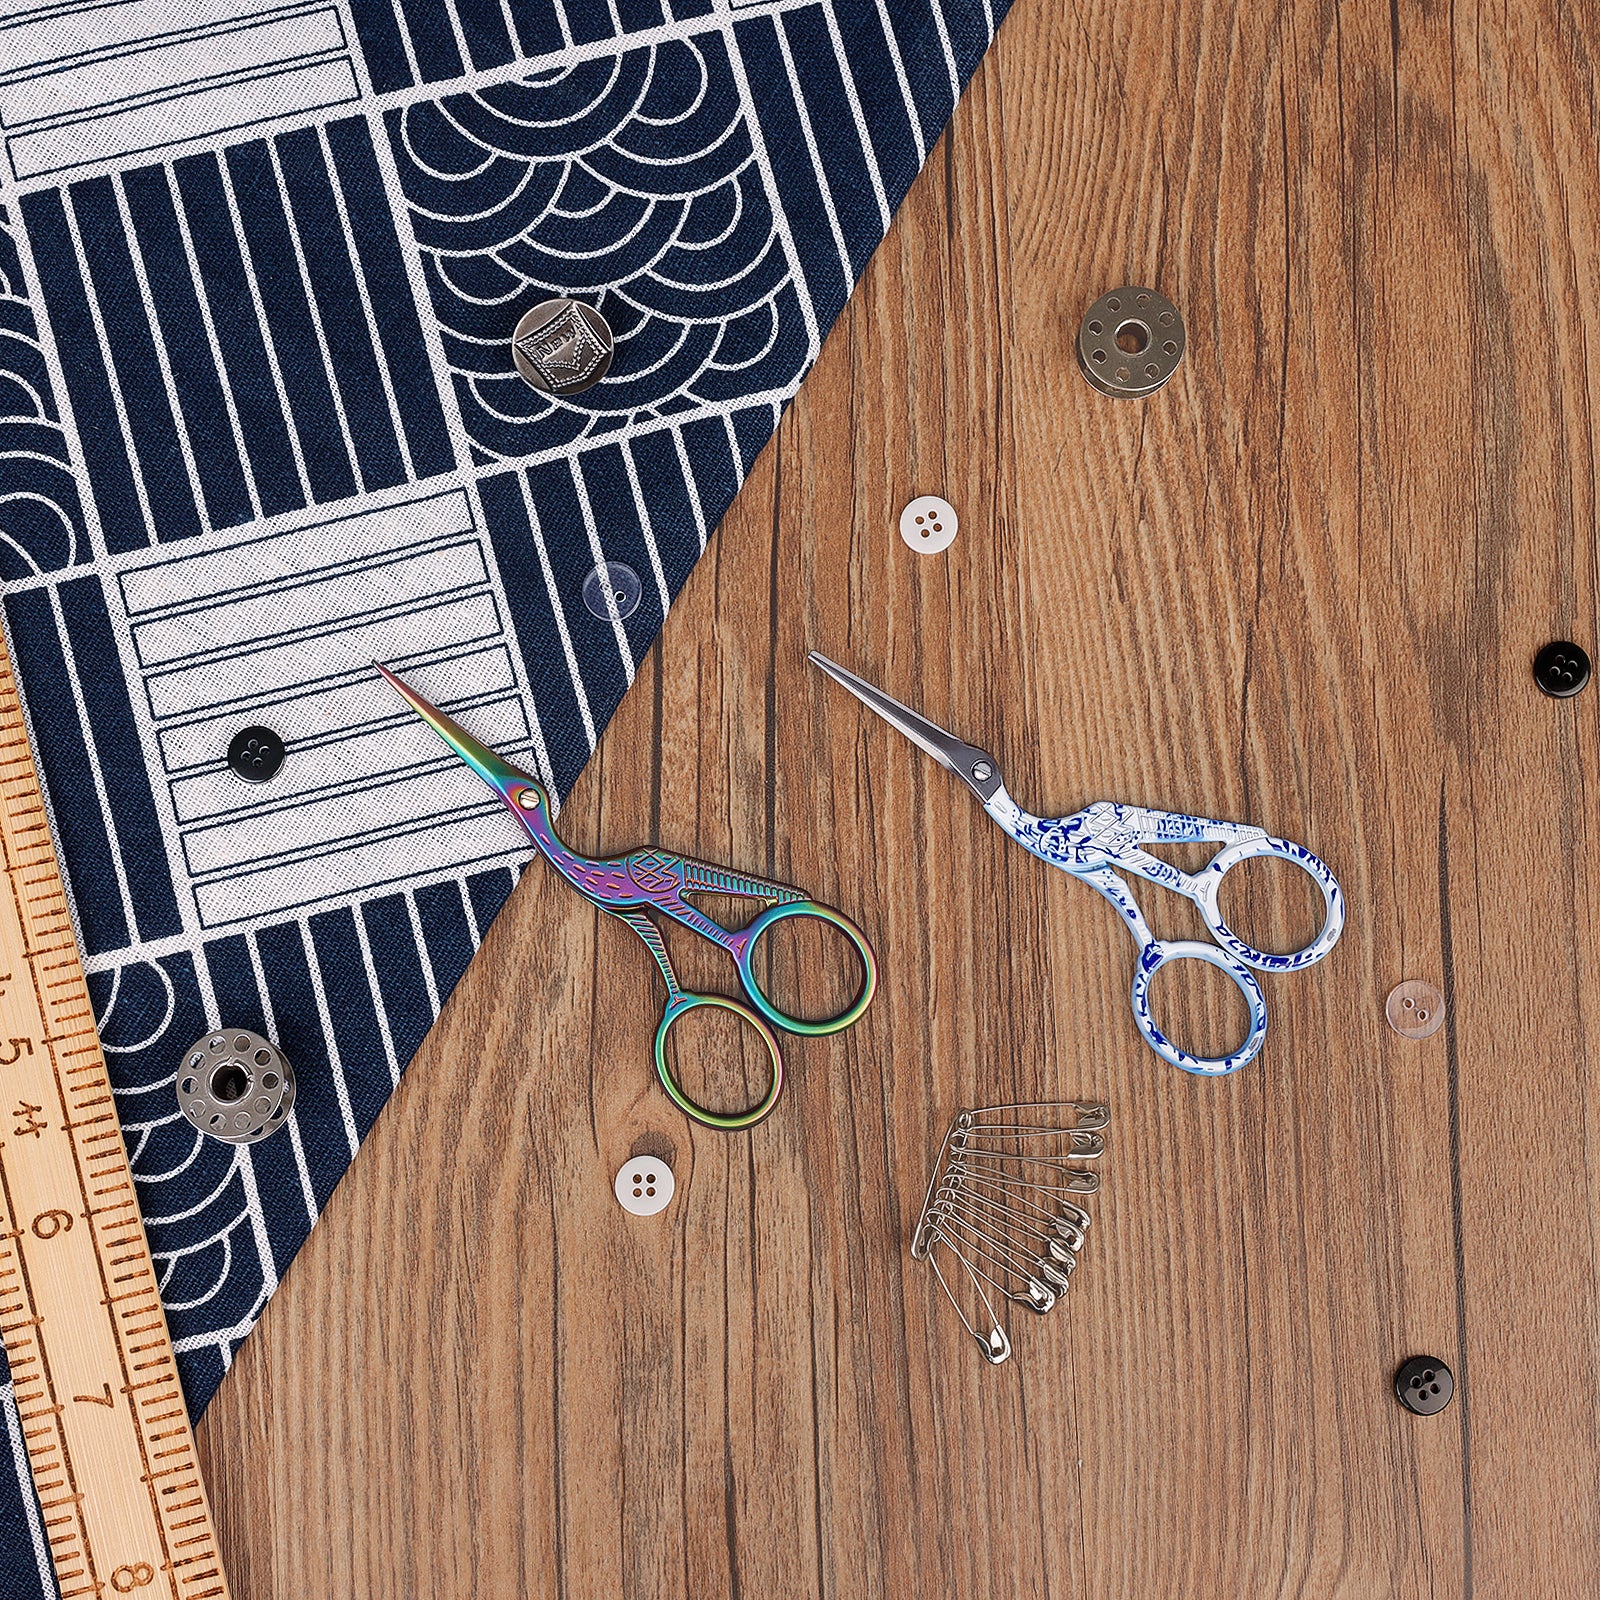 Asdirne Storch Sewing Scissors, Embroidery Scissors